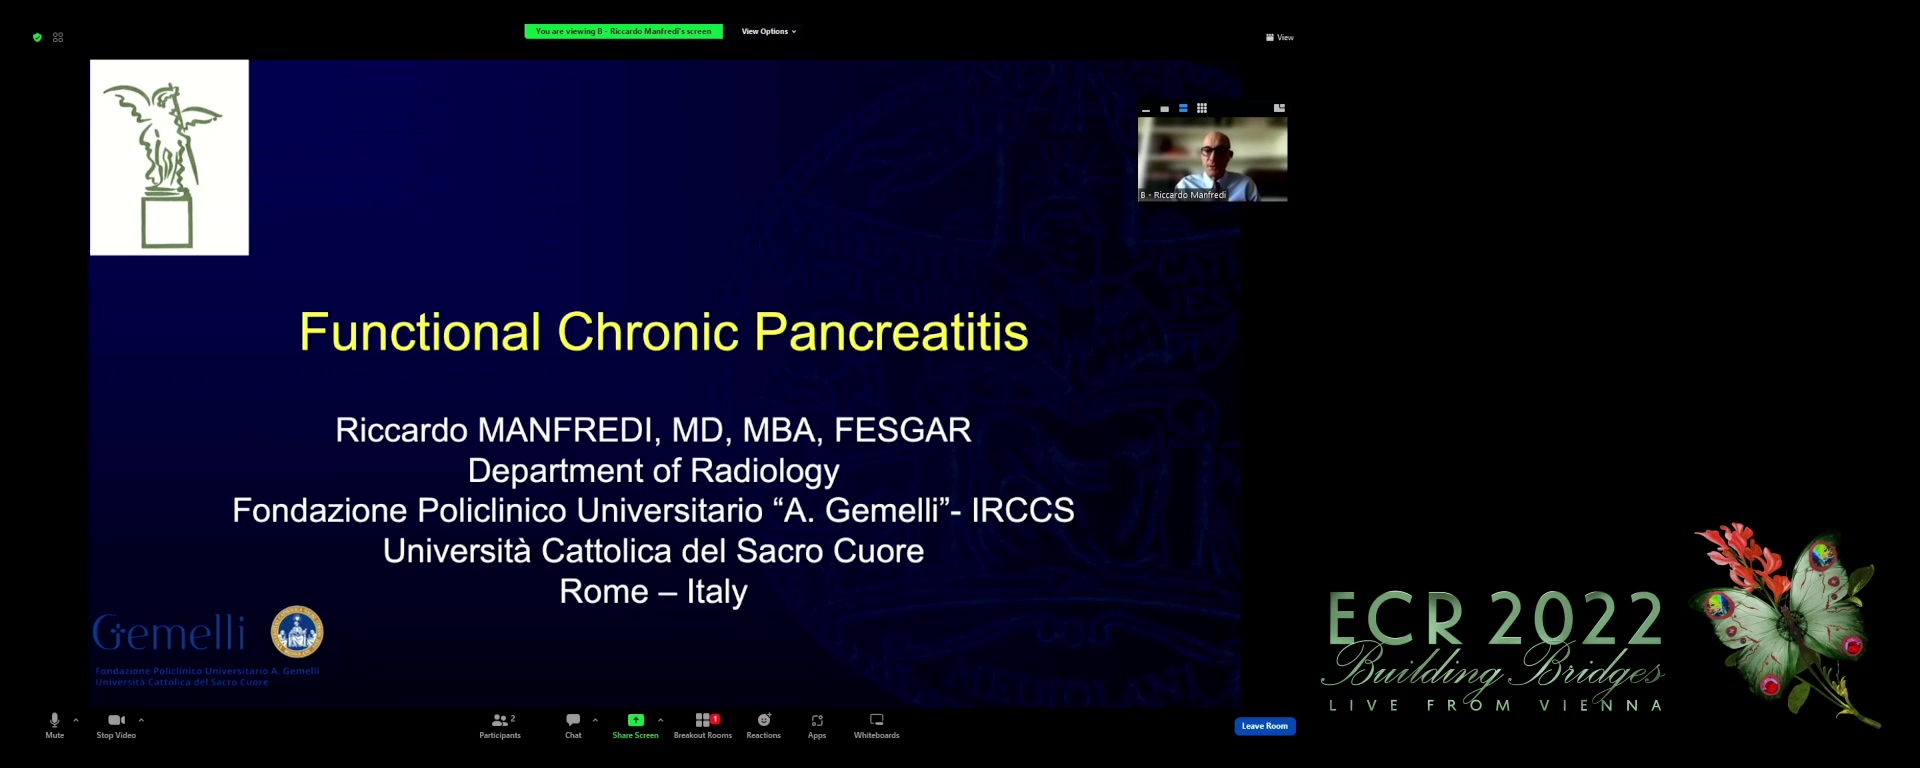 Functional evaluation of chronic pancreatitis